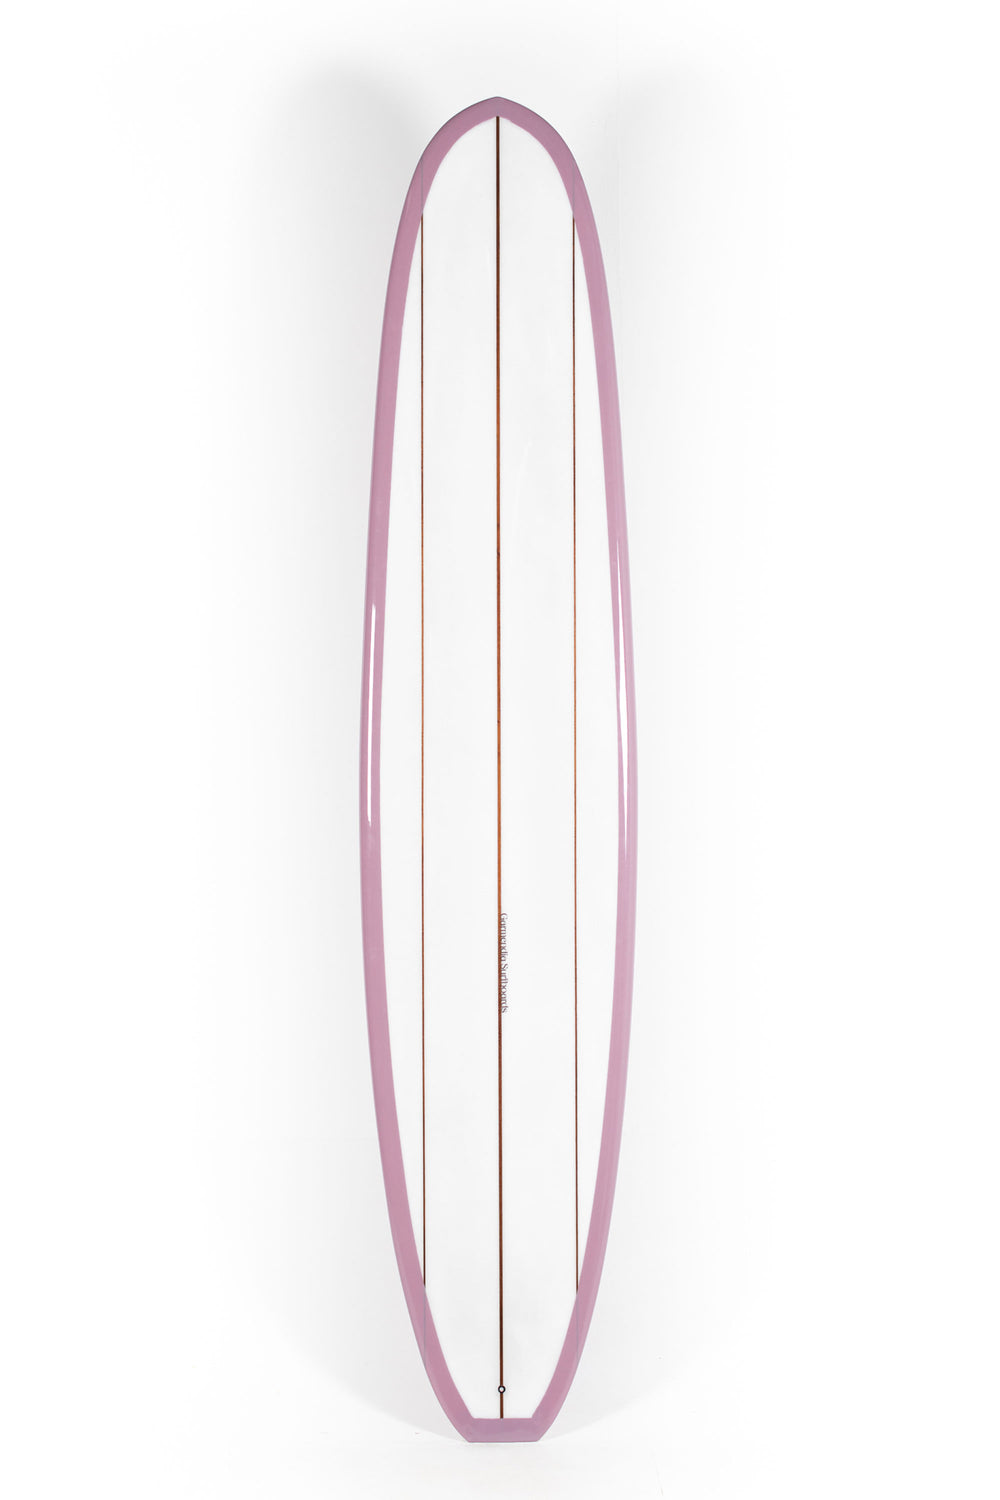 Pukas Surf Shop - Garmendia Surfboards - BULLET - 9'2